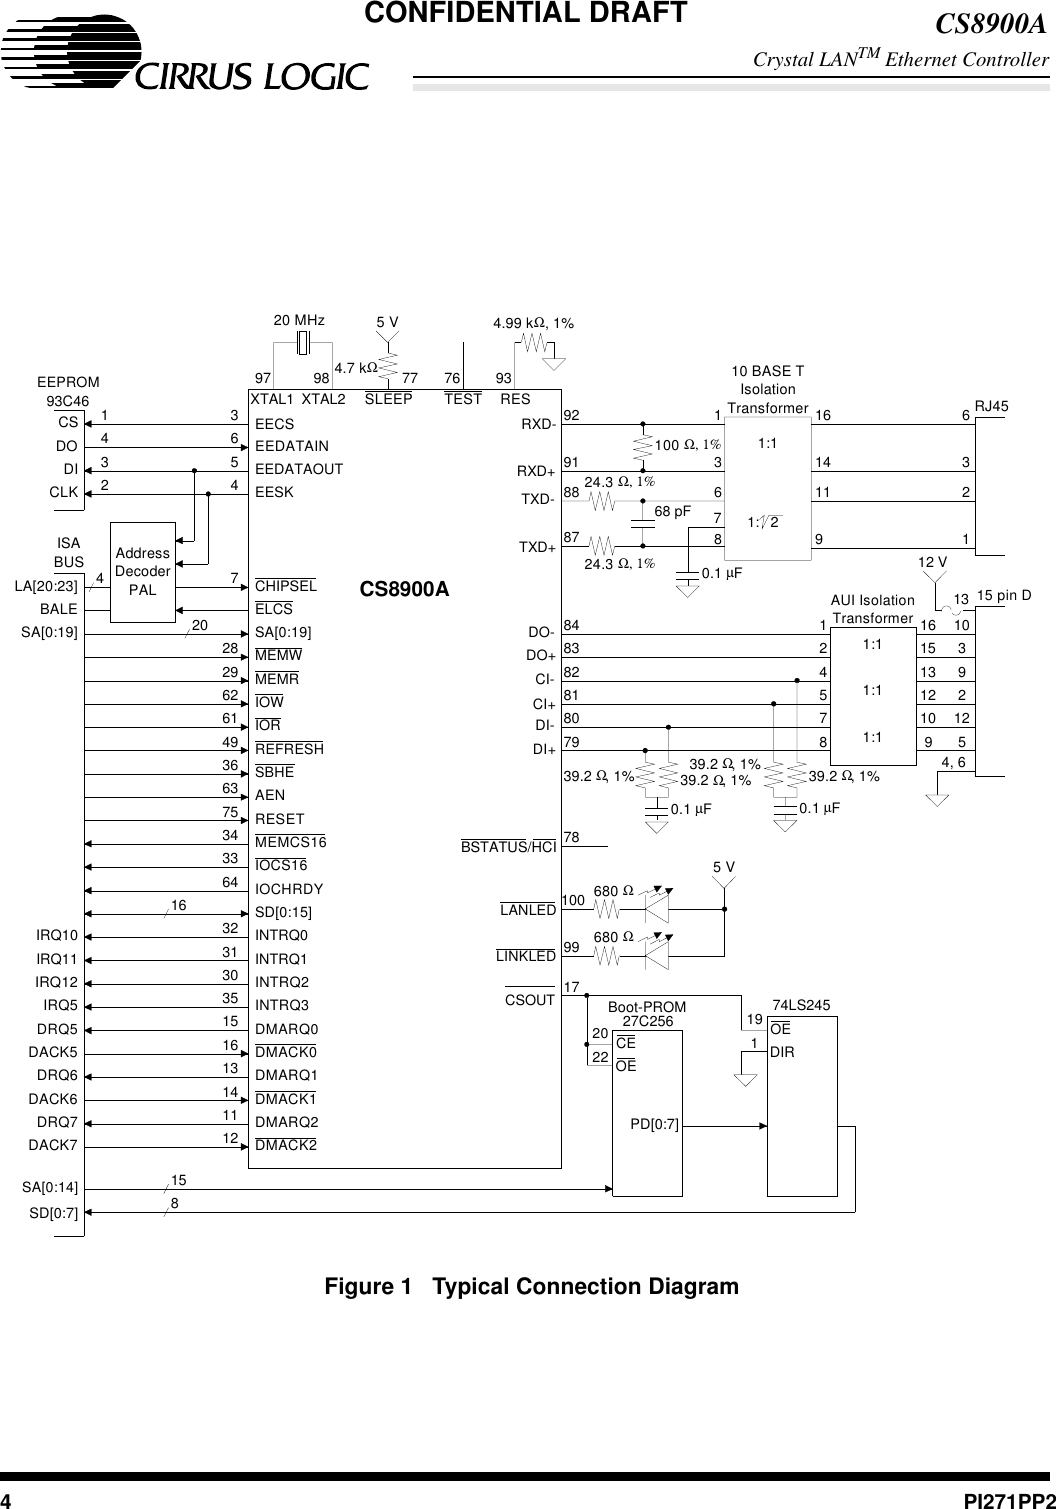 CS8900ACrystal LANTM Ethernet Controller4PI271PP2CONFIDENTIAL DRAFTEECSEEDATAOUTEESKSA[0:19]MEMWMEMRIOWIORREFRESHSBHESD[0:15]INTRQ0INTRQ1RXD-RXD+TXD-TXD+DO-DO+CI-CI+DI-DI+LANLEDLINKLEDCSOUTEEDATAINAENRESETINTRQ2INTRQ3DMARQ0DMACK0DMARQ1DMACK1DMARQ2DMACK2MEMCS16IOCHRDY1:68 pF136824.3 Ω, 1%24.3 Ω, 1%92918887100 Ω, 1%RJ45161411963211:11458848281791613129101092583802715 3121:11:10.1 µF680 Ω680 ΩCEOEOEDIR202219174LS245XTAL1 XTAL2 SLEEP TEST RESCSDODICLK1324354693C46286261297IRQ10IRQ11IRQ12IRQ5DRQ5DACK5DRQ6DACK6DRQ7DACK71620SA[0:19]LA[20:23]BALE497 98 934.99 kΩ, 1%12 V4, 620 MHz0.1 µF39.2 Ω, 1%5 V4.7 kΩCS8900ACHIPSELIOCS164963753634643332303531151314161112991001739.2 Ω, 1%39.2 Ω, 1% 39.2 Ω, 1%EEPROMAddressDecoderPAL27C2562ELCSISA BUS10 BASE TIsolationTransformer1:115 pin DAUI IsolationTransformerBSTATUS/HCIBoot-PROMPD[0:7]SA[0:14]SD[0:7]1585 V1377 76780.1 µF7Figure 1 Typical Connection Diagram